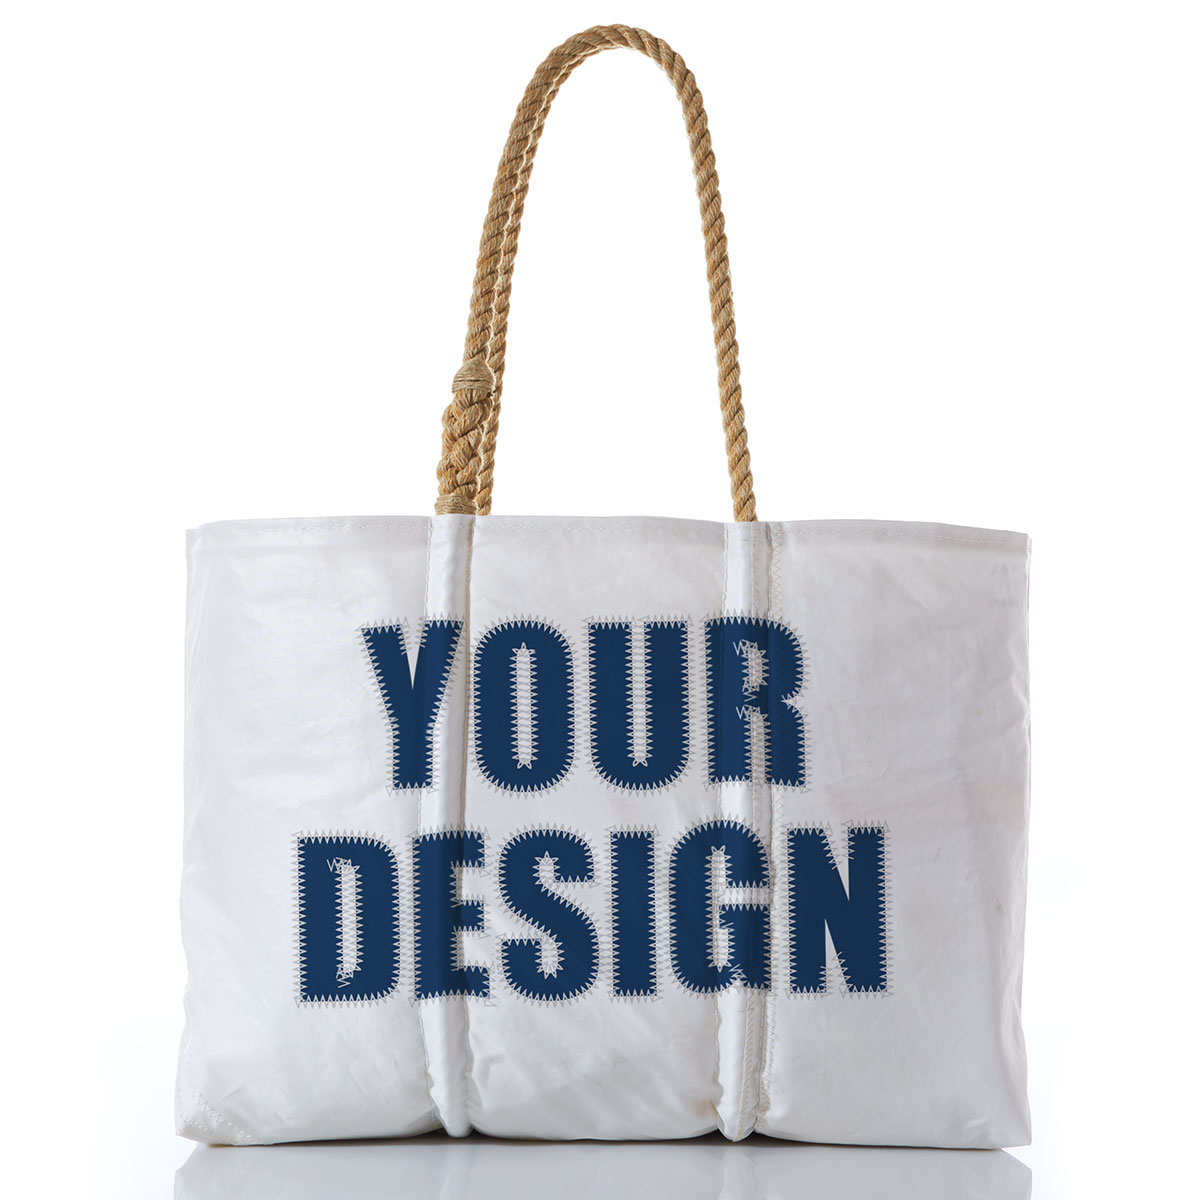 Make Custom Photo Tote Bags in Canvas